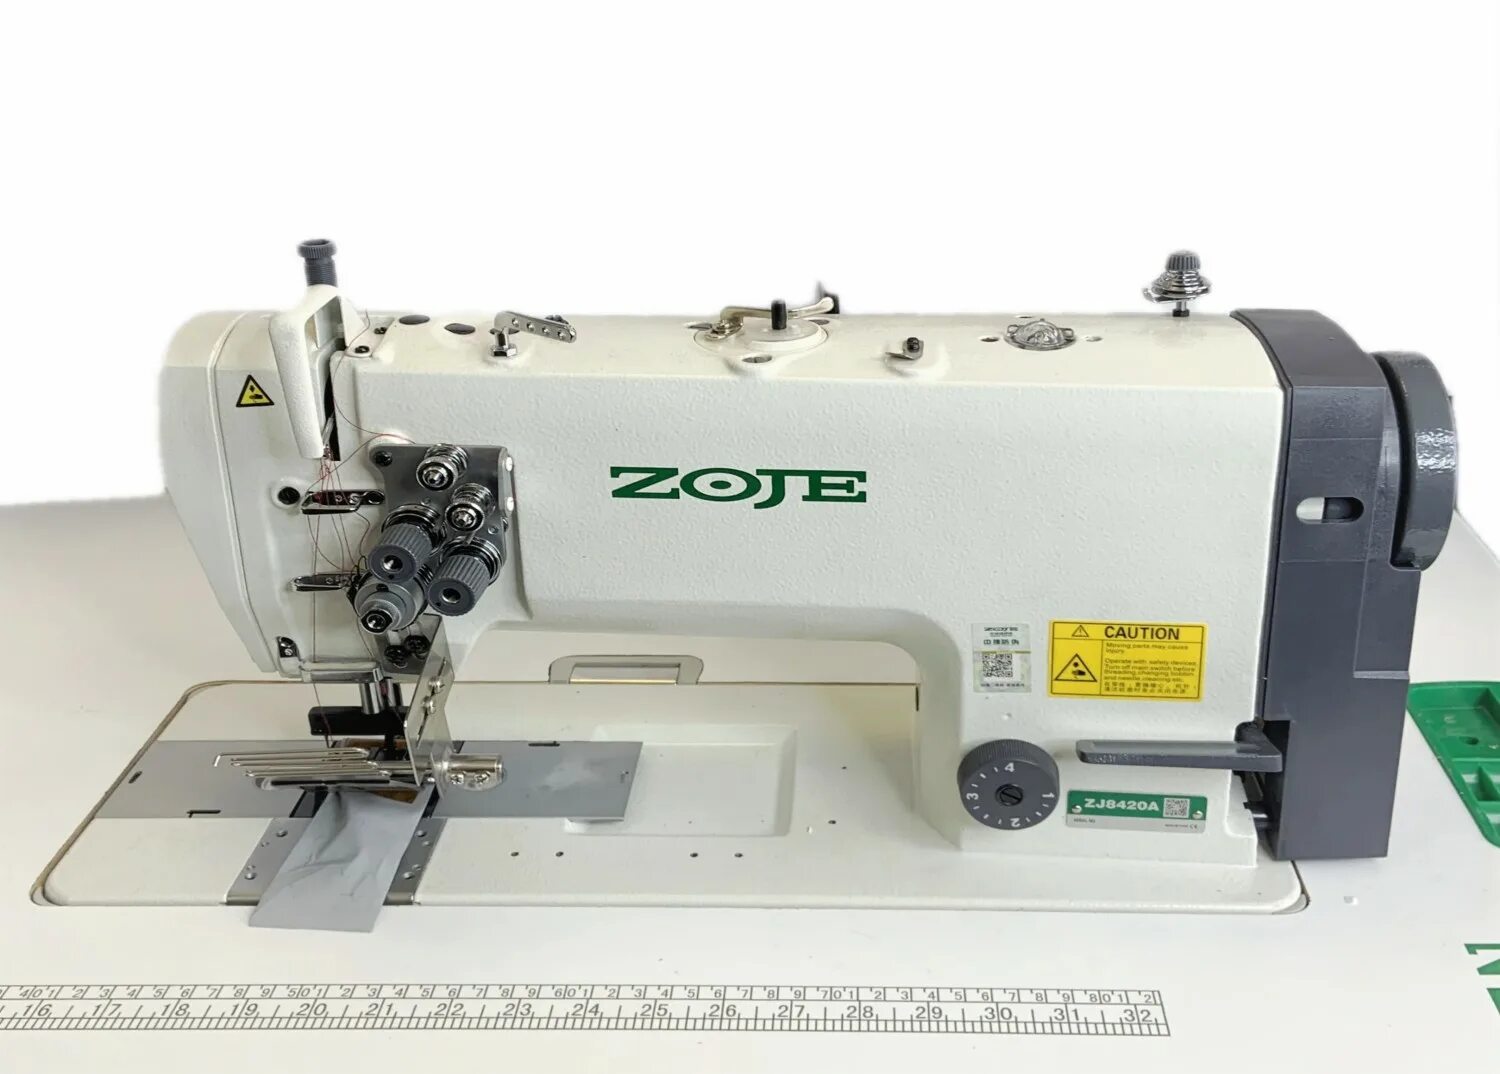 Zoje швейная машина Промышленная. Zoje швейная рашма Промышленная. Швейная машина Zoje a6000-g/02. Zoje a8000-d4-TP/02. Швейная машинка zoje